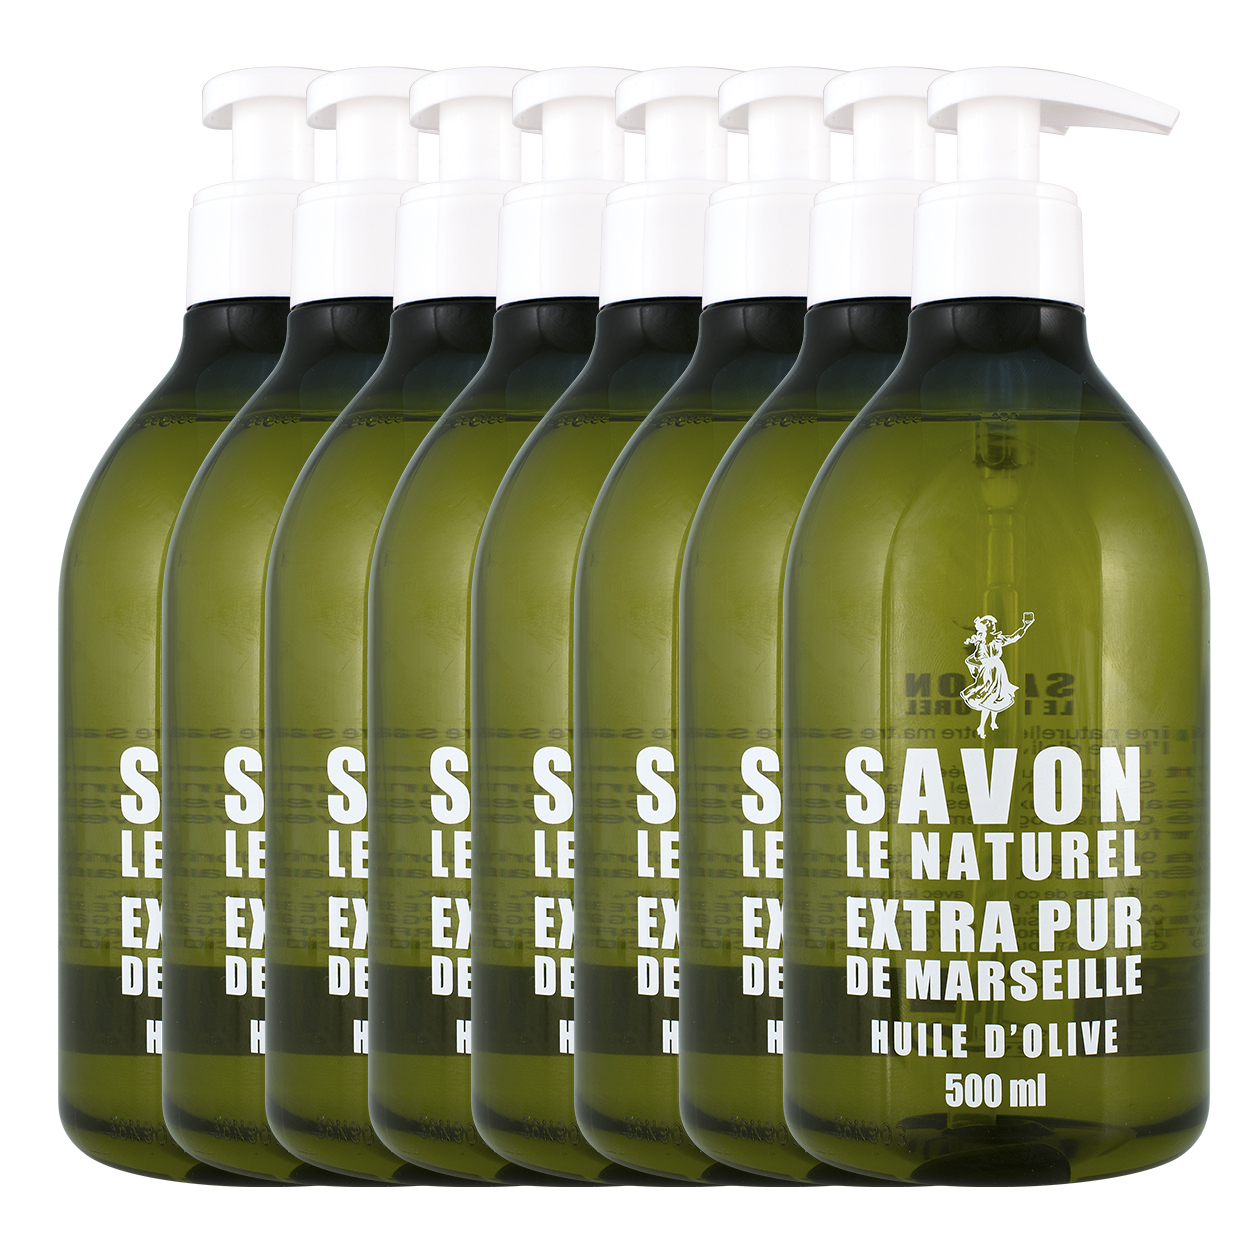 Savon le Naturel Savon Vloeibare Natuurlijk Handzeep - Olijfolie - 8 x 500ml - Multiverpakking